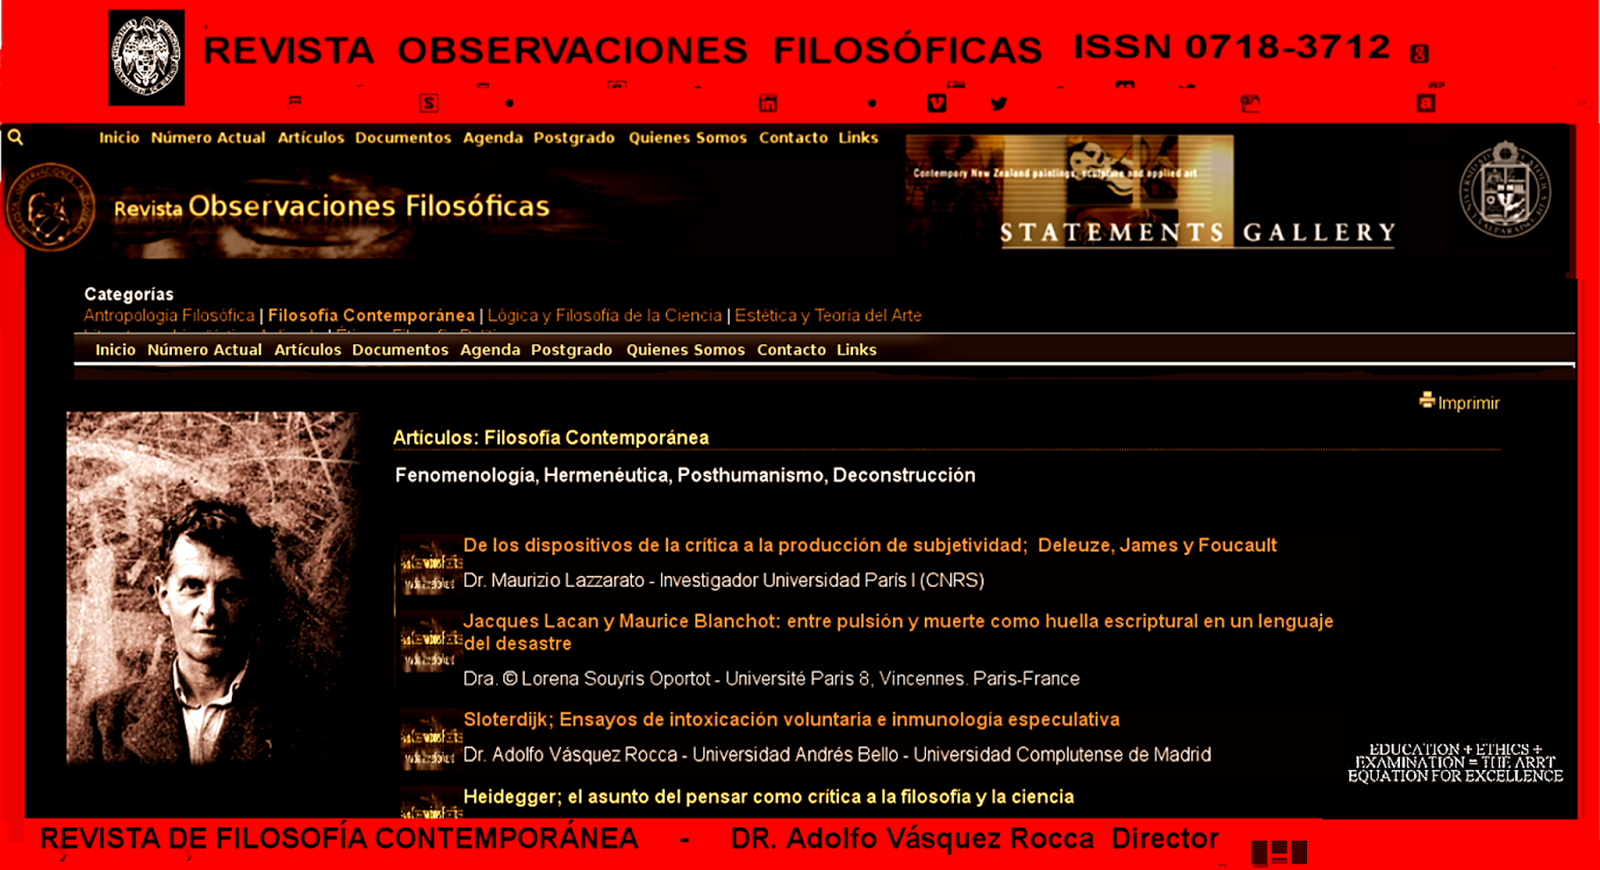 http://4.bp.blogspot.com/-eLo-RKsYvNA/Um6AHFRtJTI/AAAAAAAALeQ/d8a7alDgO30/s1600/Revista+de+Filosofia+Contemporanea++_++Revista+OBSERVACIONES+FILOSOFICAS+_+Adolfo+Vasquez+Rocca+Wittgenstein+7+XL+.png